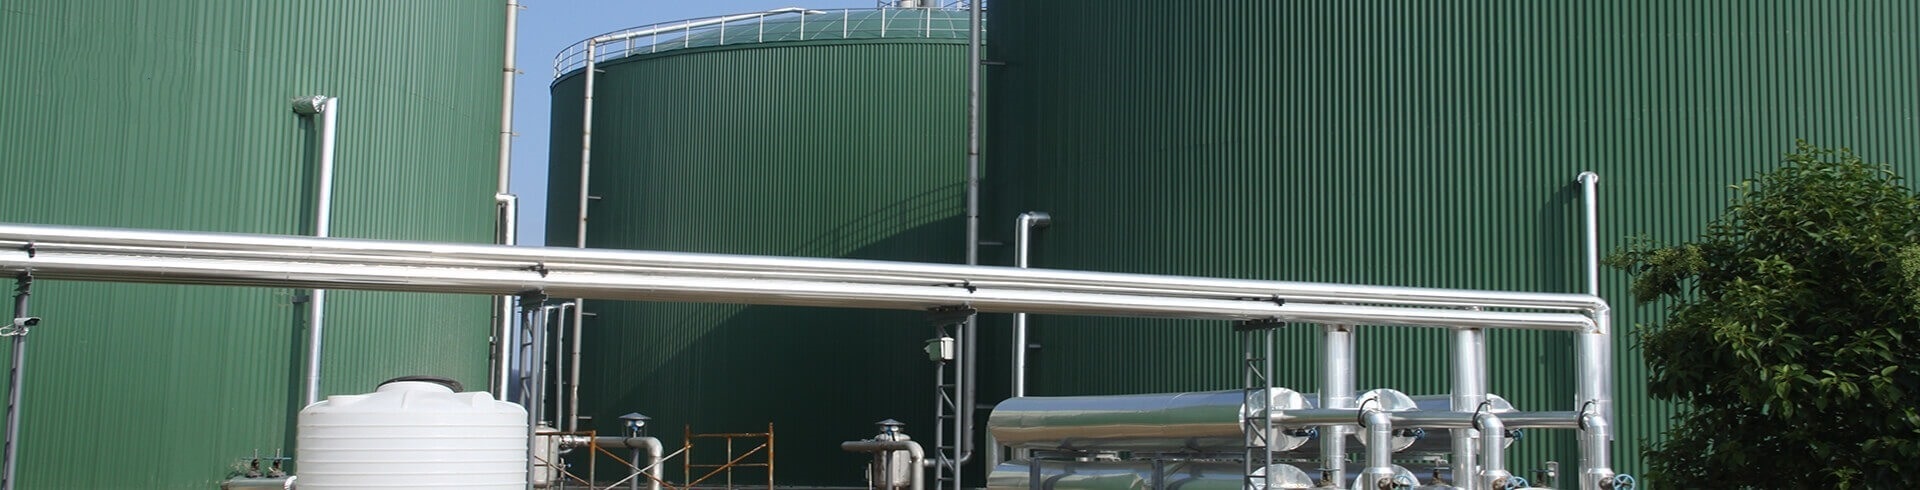 Digester for MAN MWM 1000kW 1MW biogas power generation & CHP cogeneration ETTES POWER